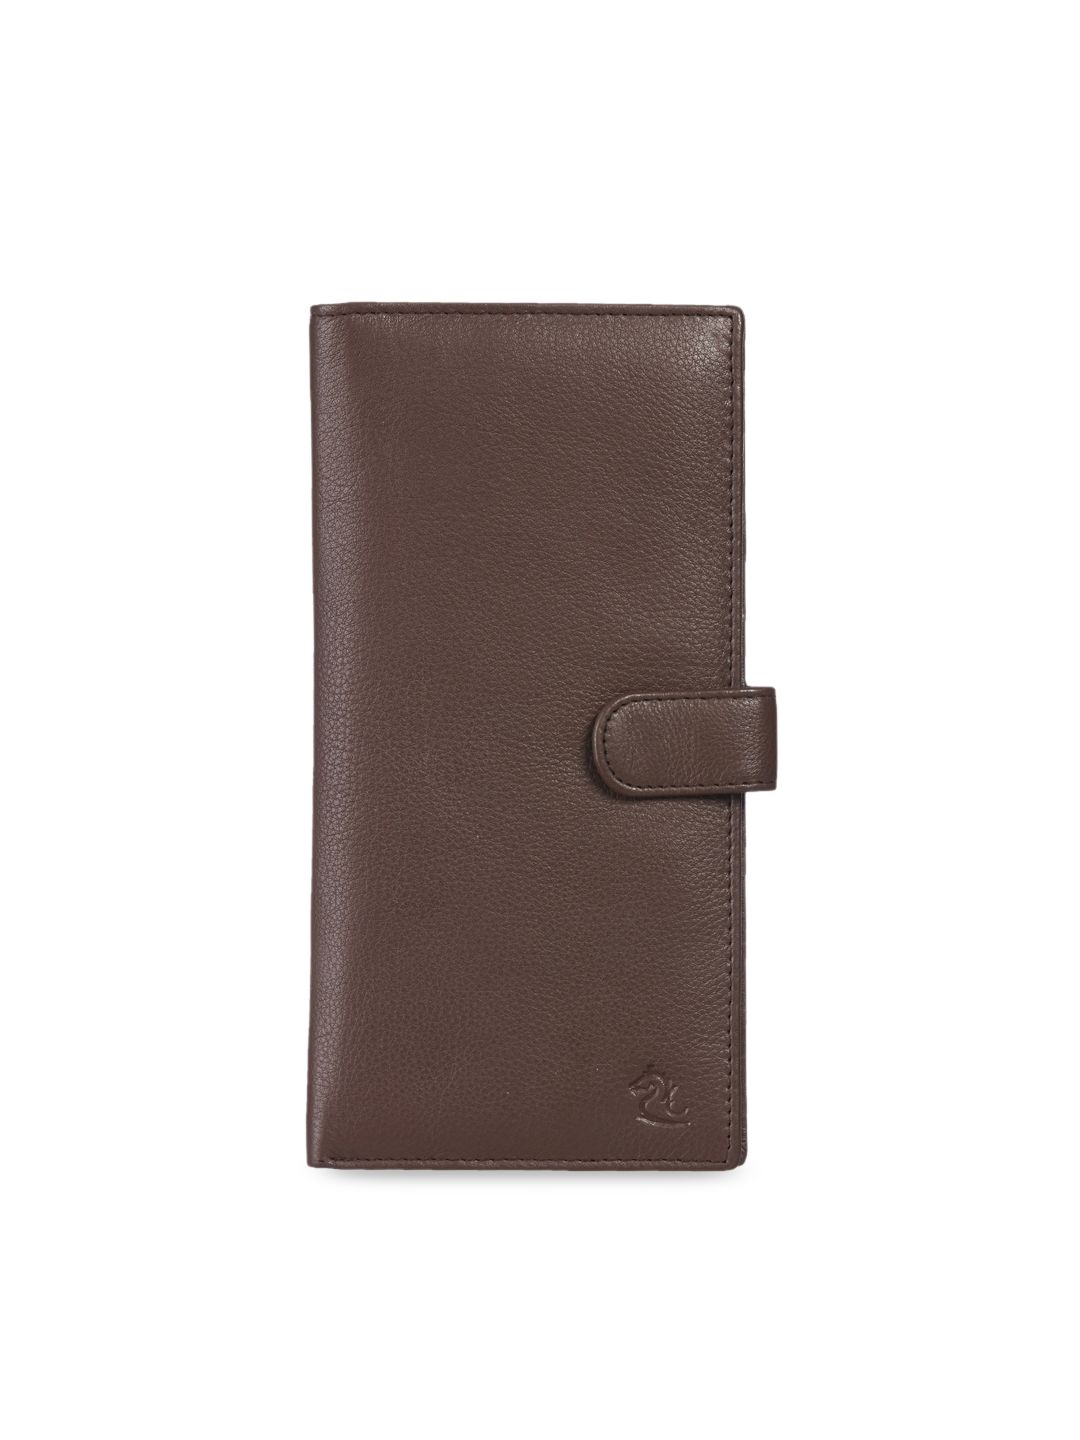 Kara Unisex Brown Solid Leather Passport Holder Price in India